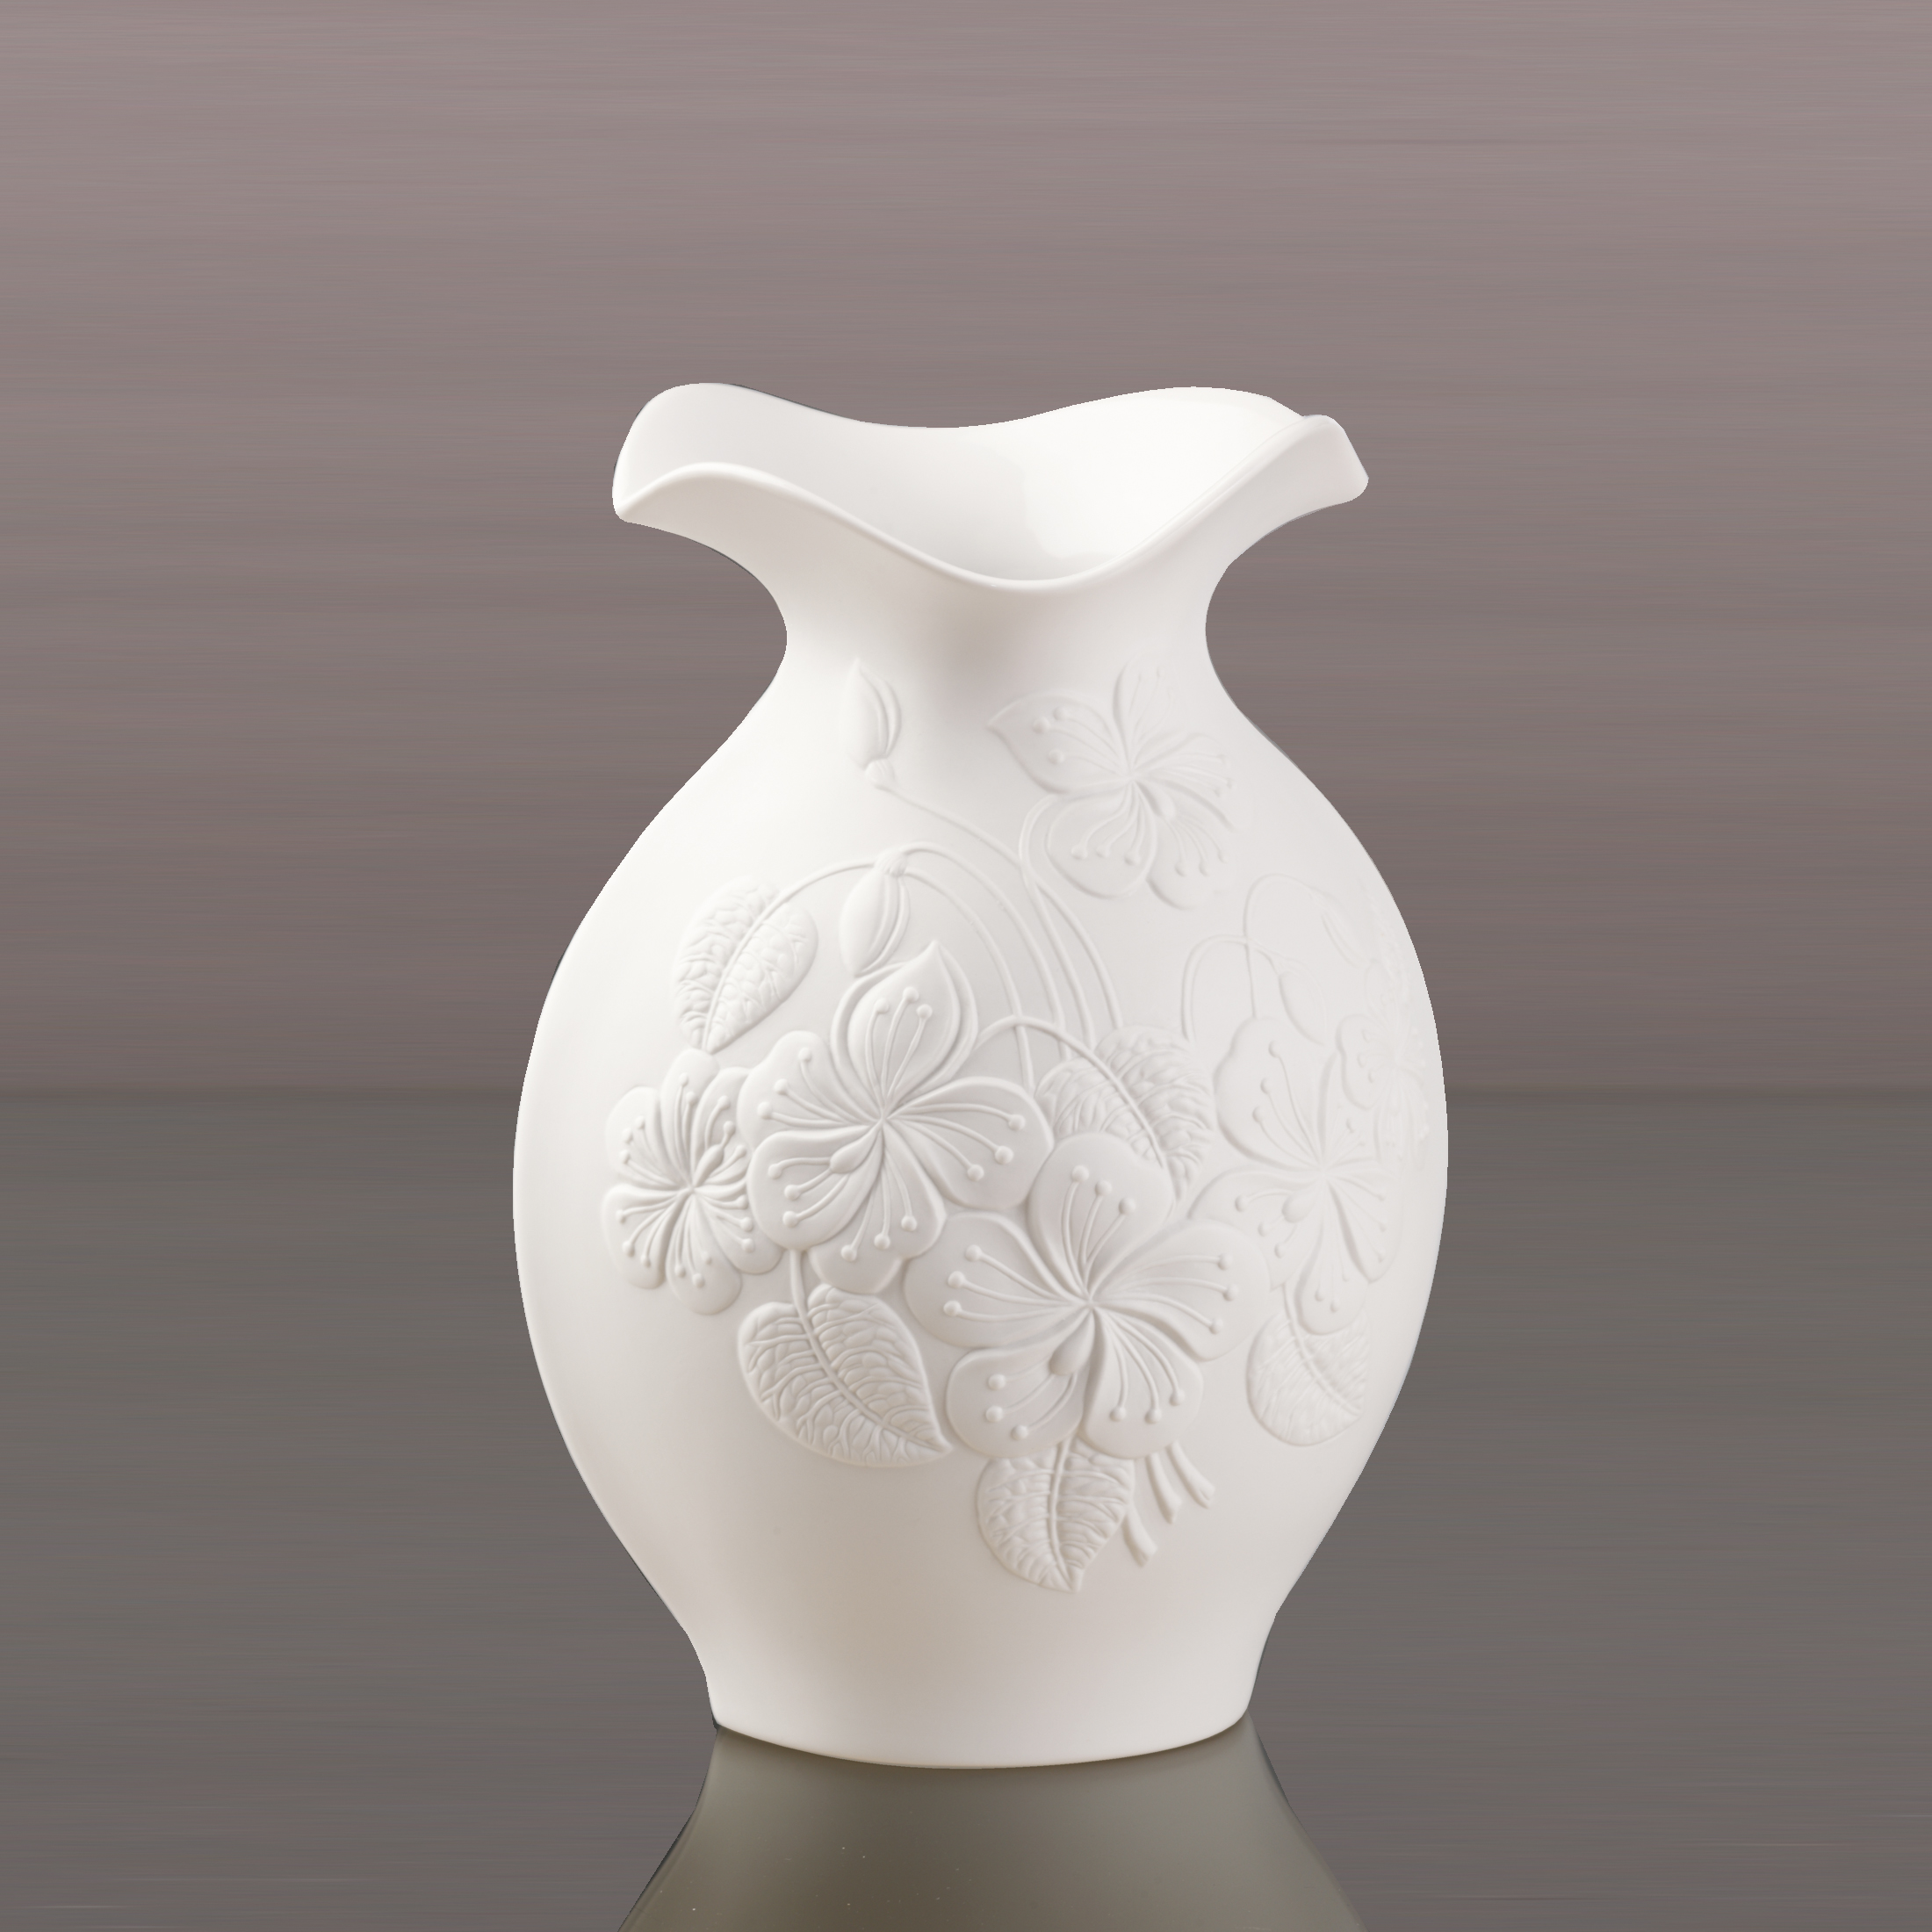 Dekoralia.de - Goebel Vase Floralie Kaiser Porzellan 25 cm